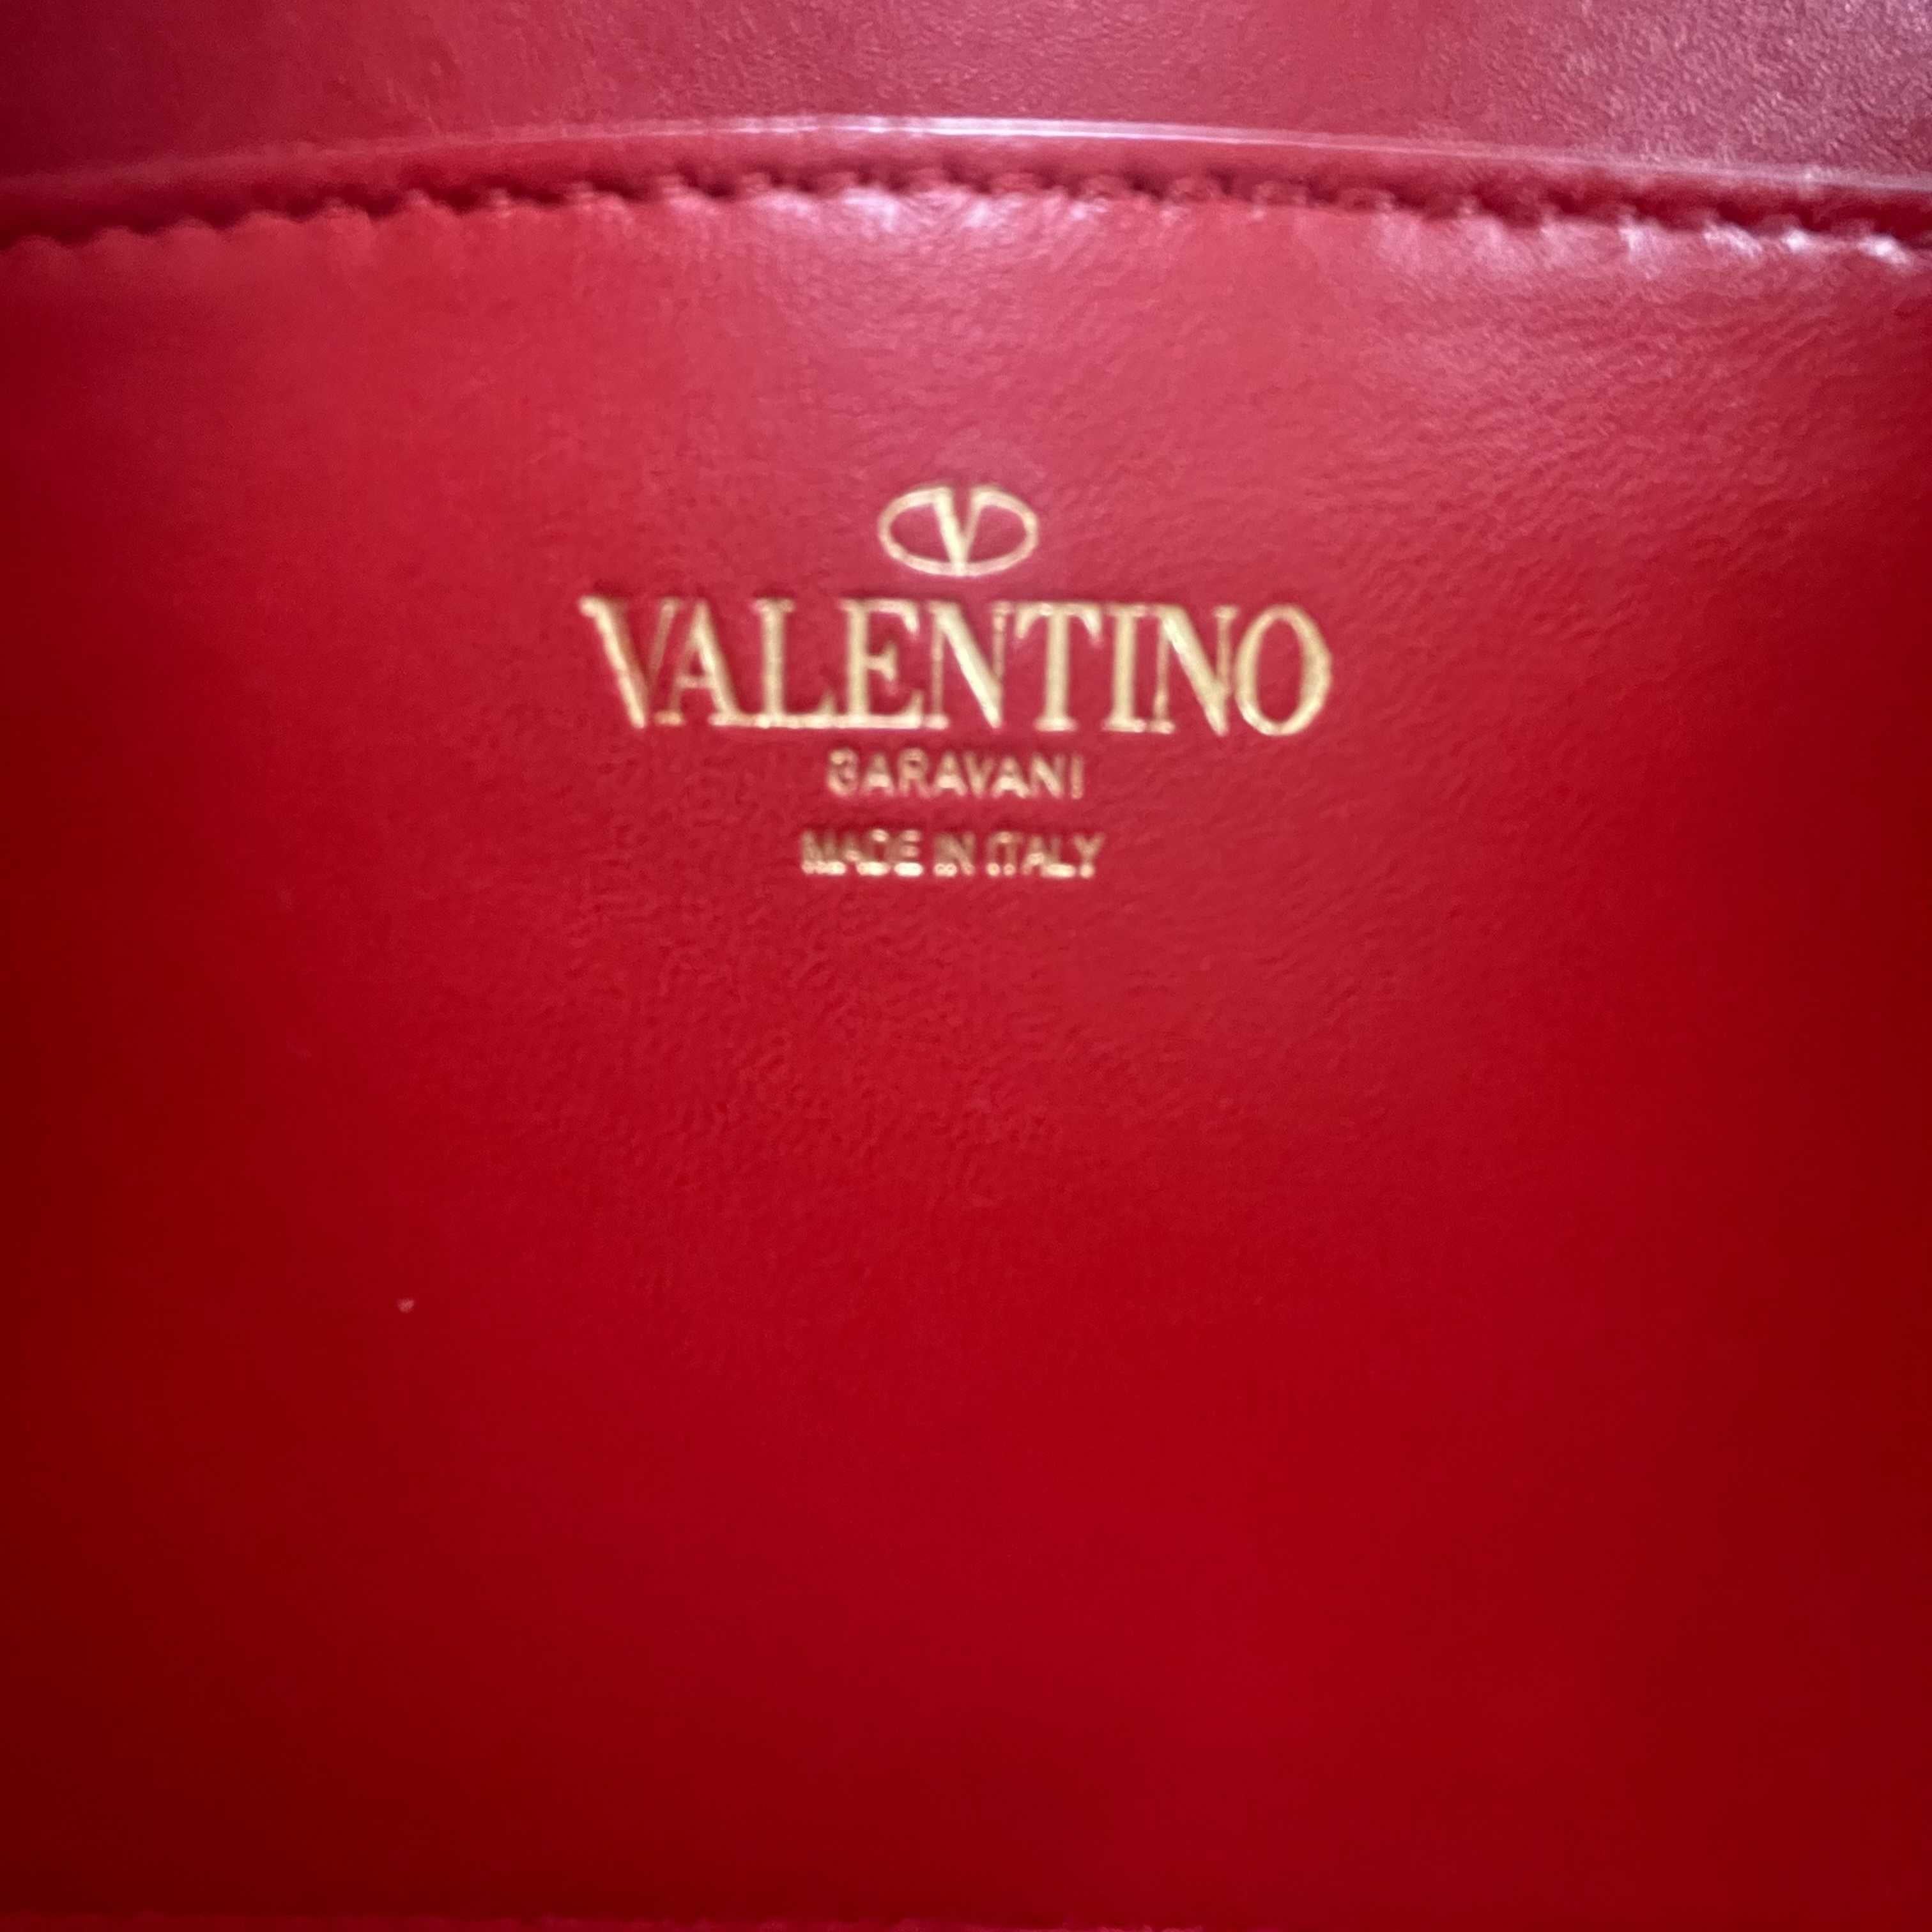 Valentino Garavani - NEW Stud Sign Wicker Shoulder Bag w/ Removable Strap For Sale 7